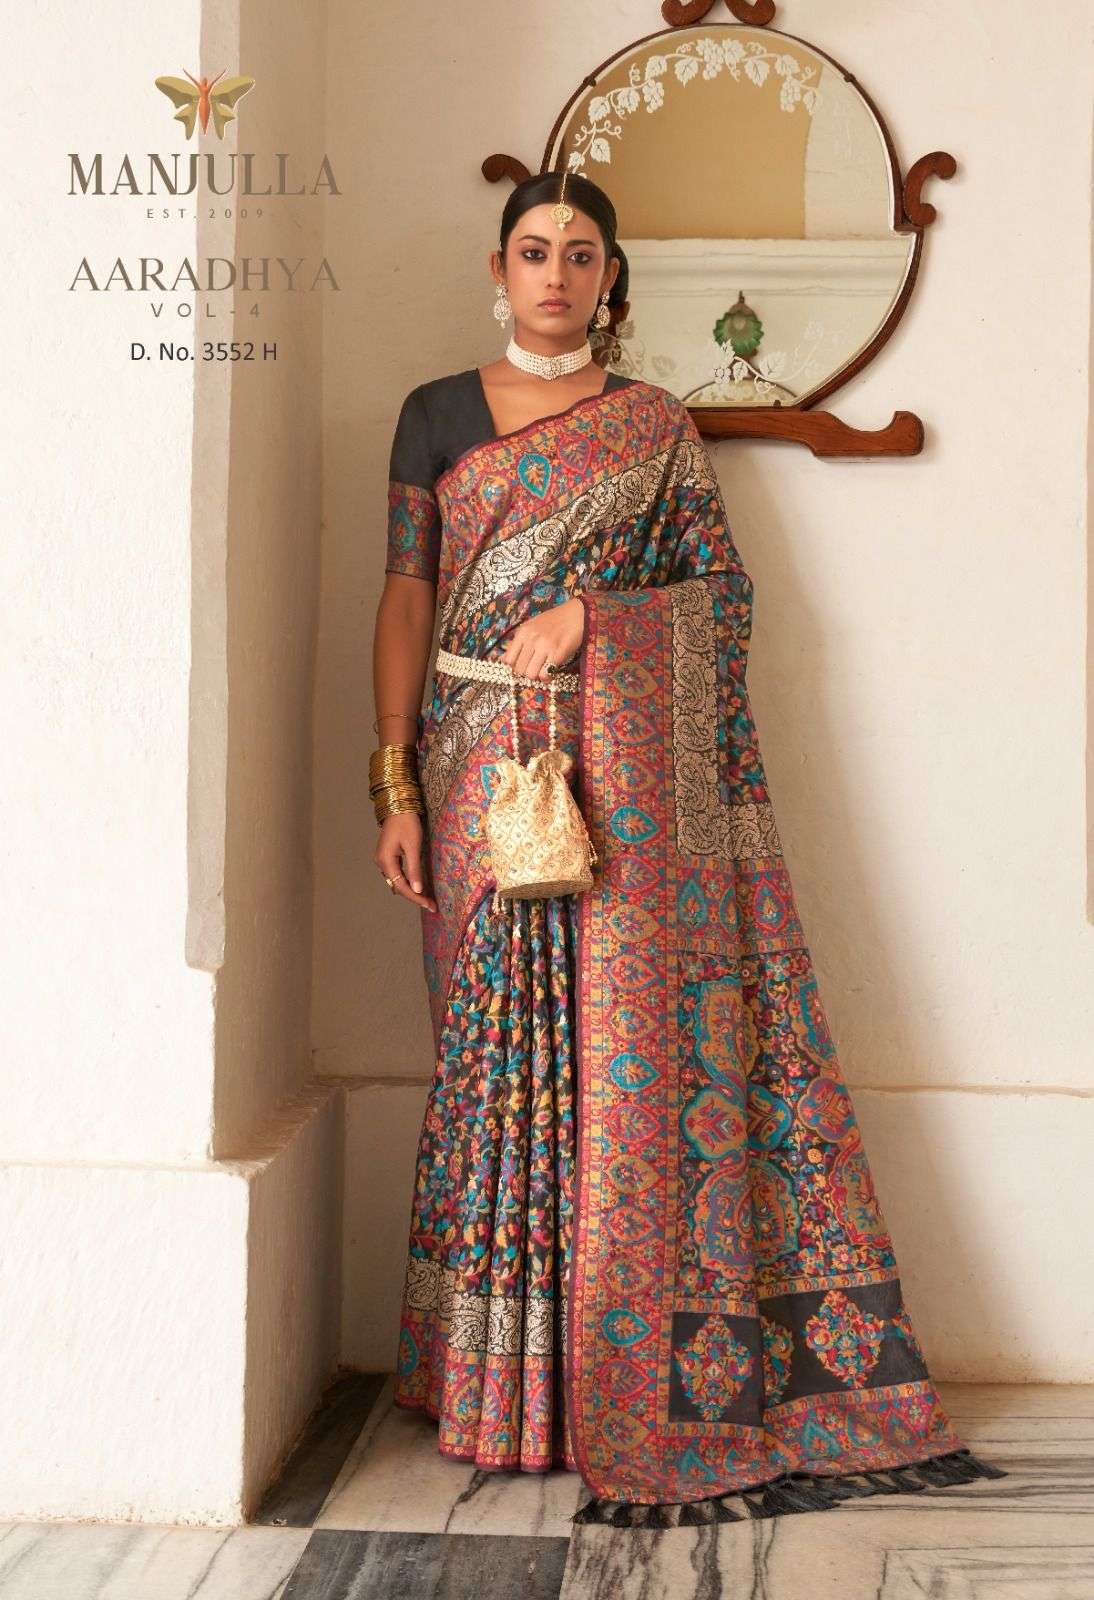 Manjula Aaradhya Vol 4 Heavy Kashmiri Designs Partywear Saree Catalog Wholesaler